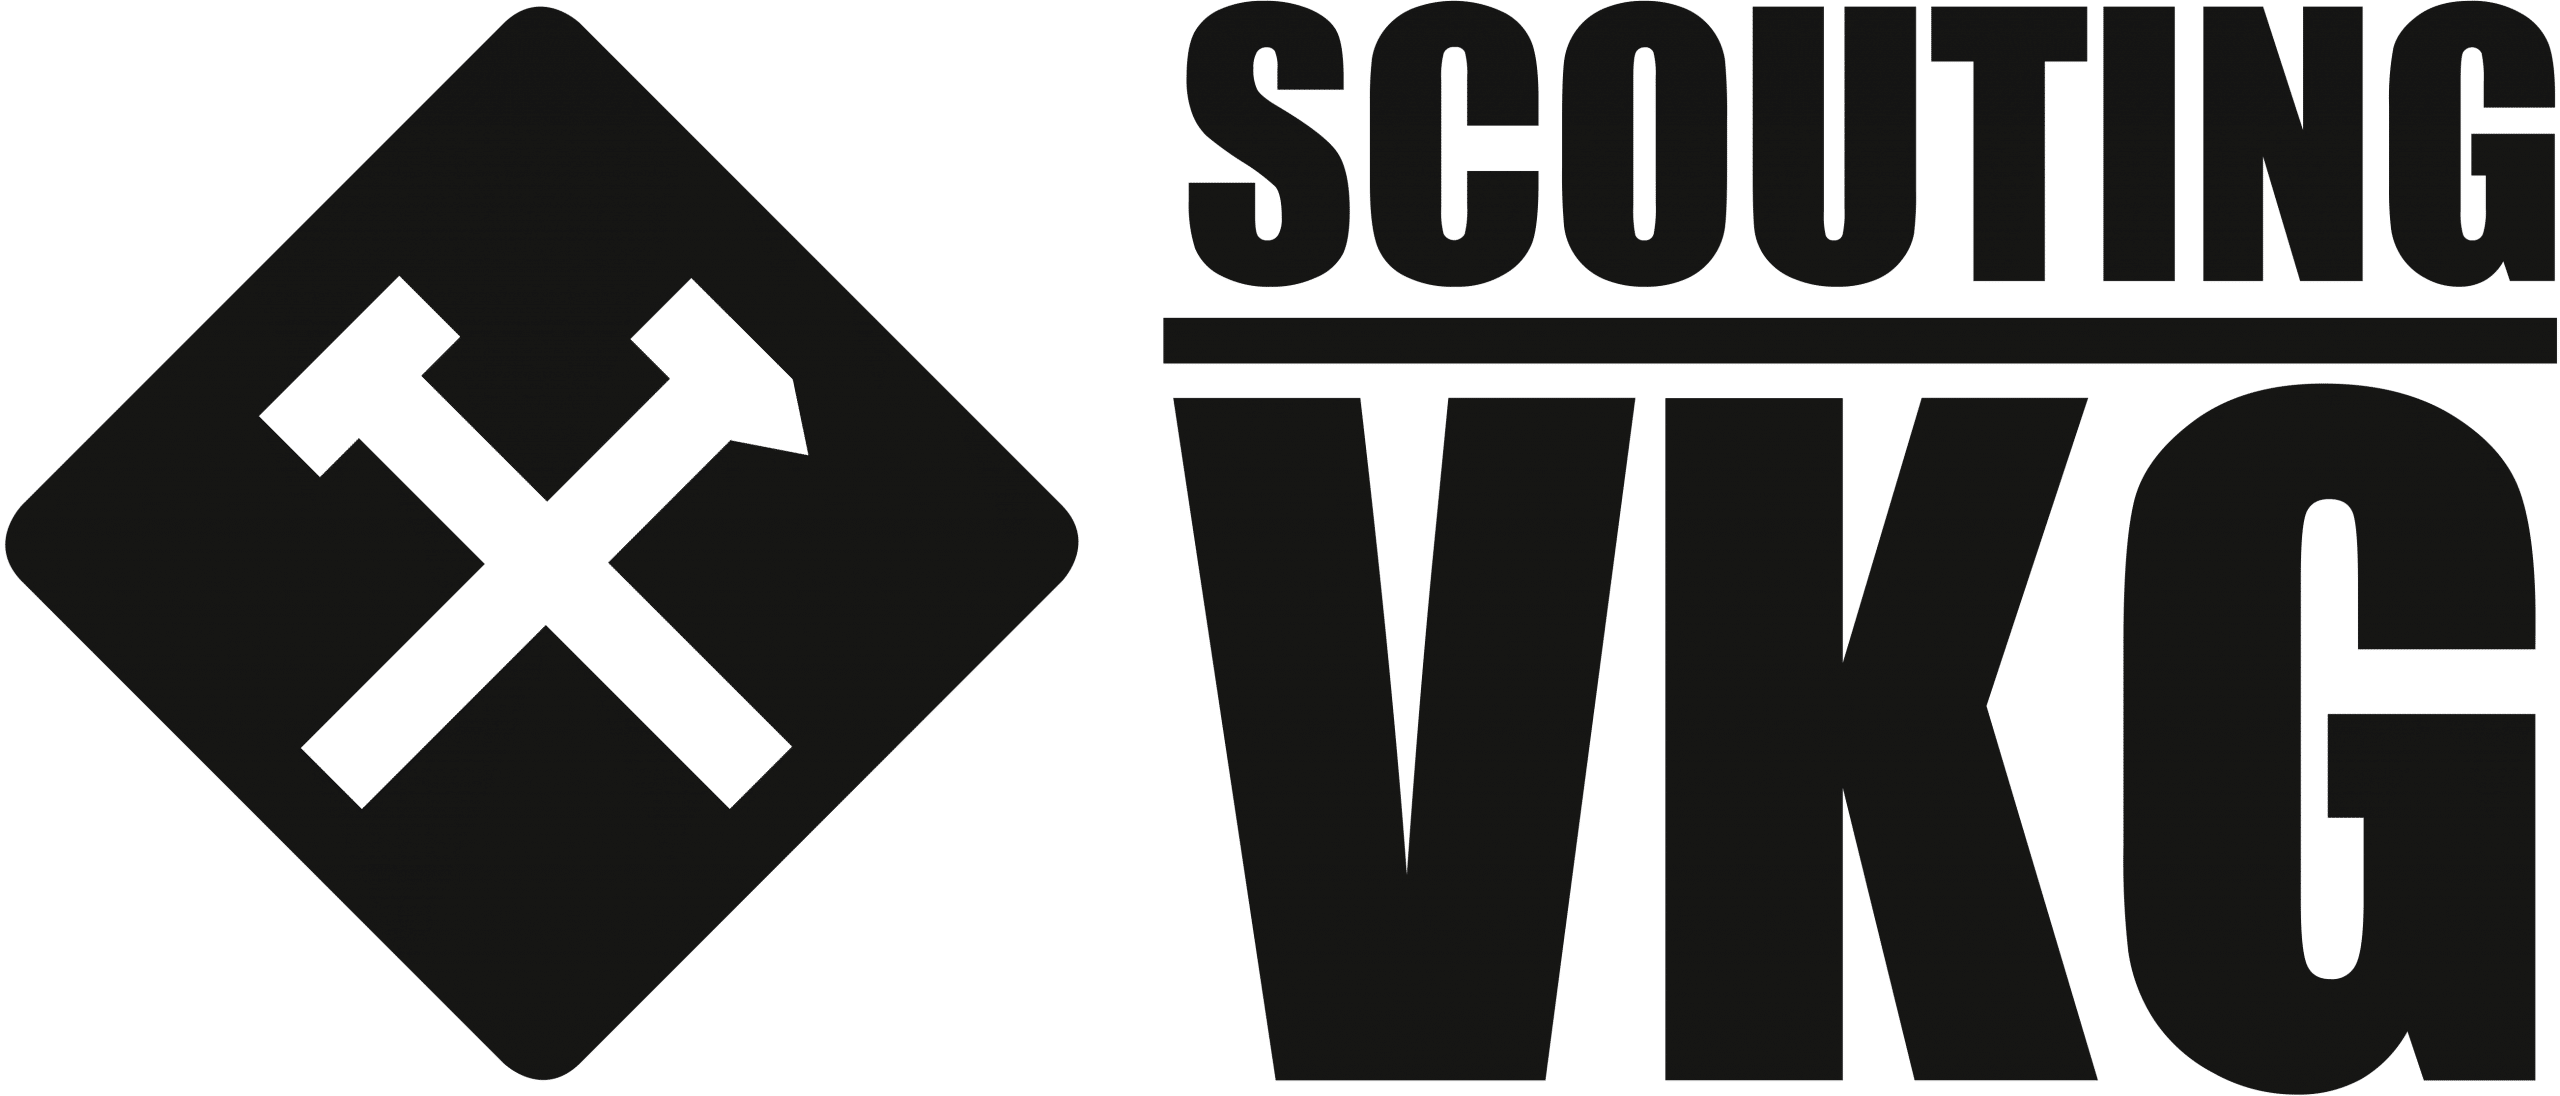 (c) Scouting-vkg.nl